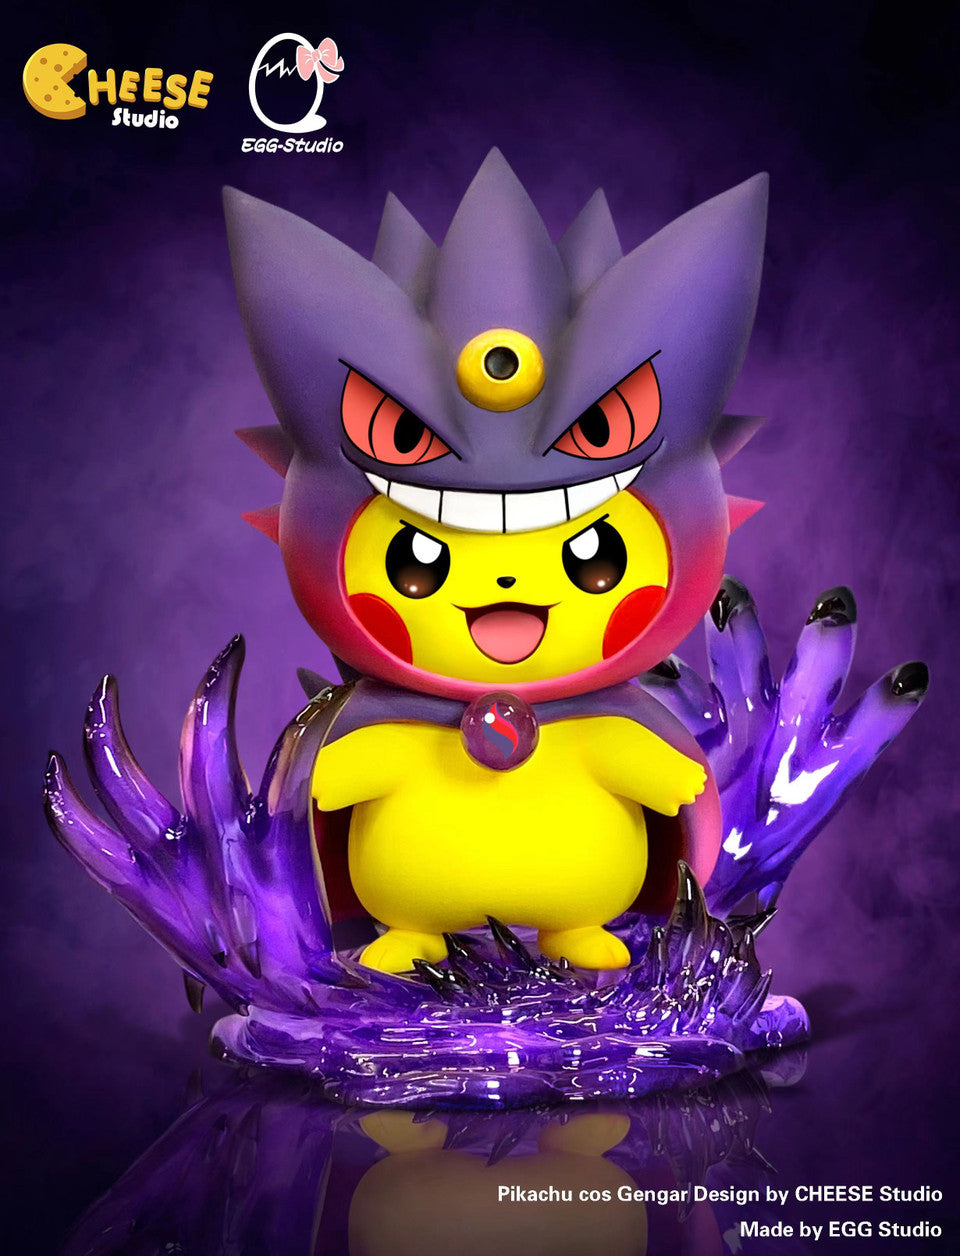 EGG - Pikachu cos Gengar